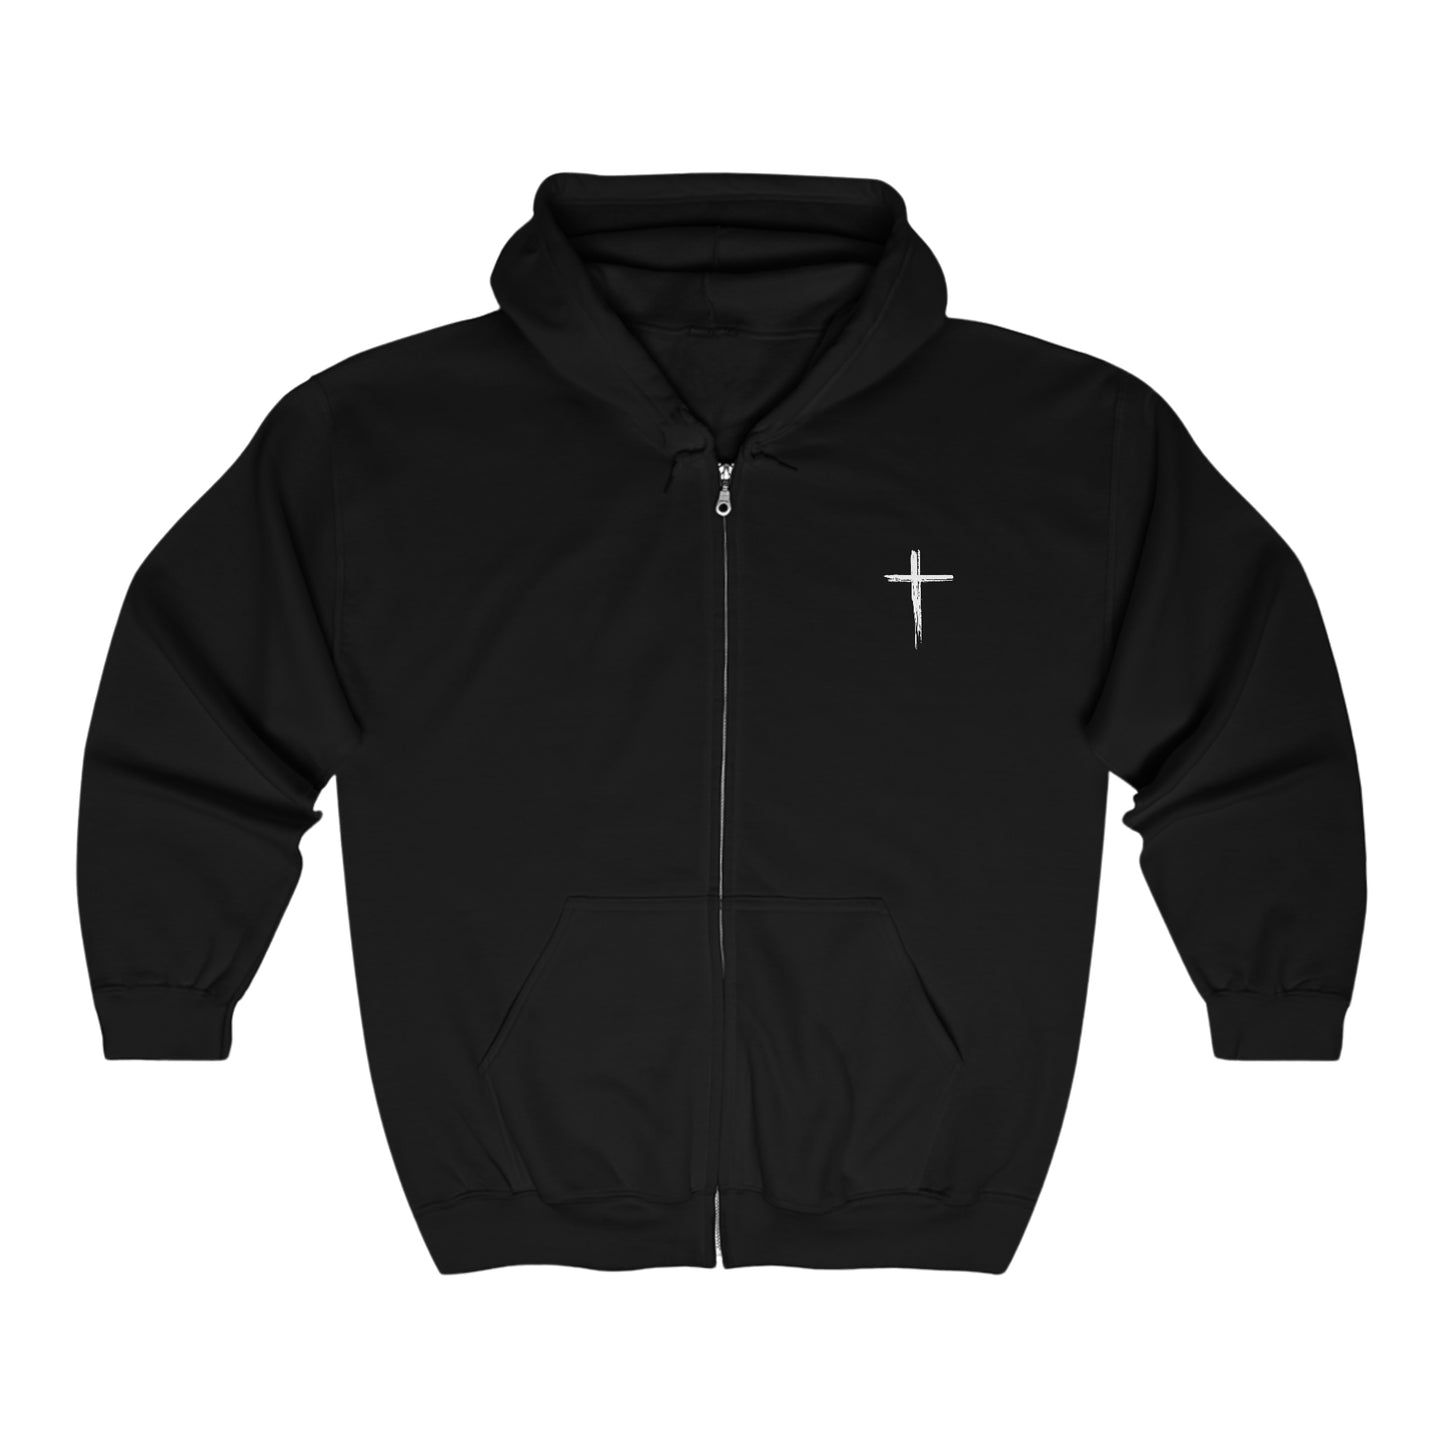 Christian Hooded Sweatshirt - Christian Warrior - Unisex Full Zip